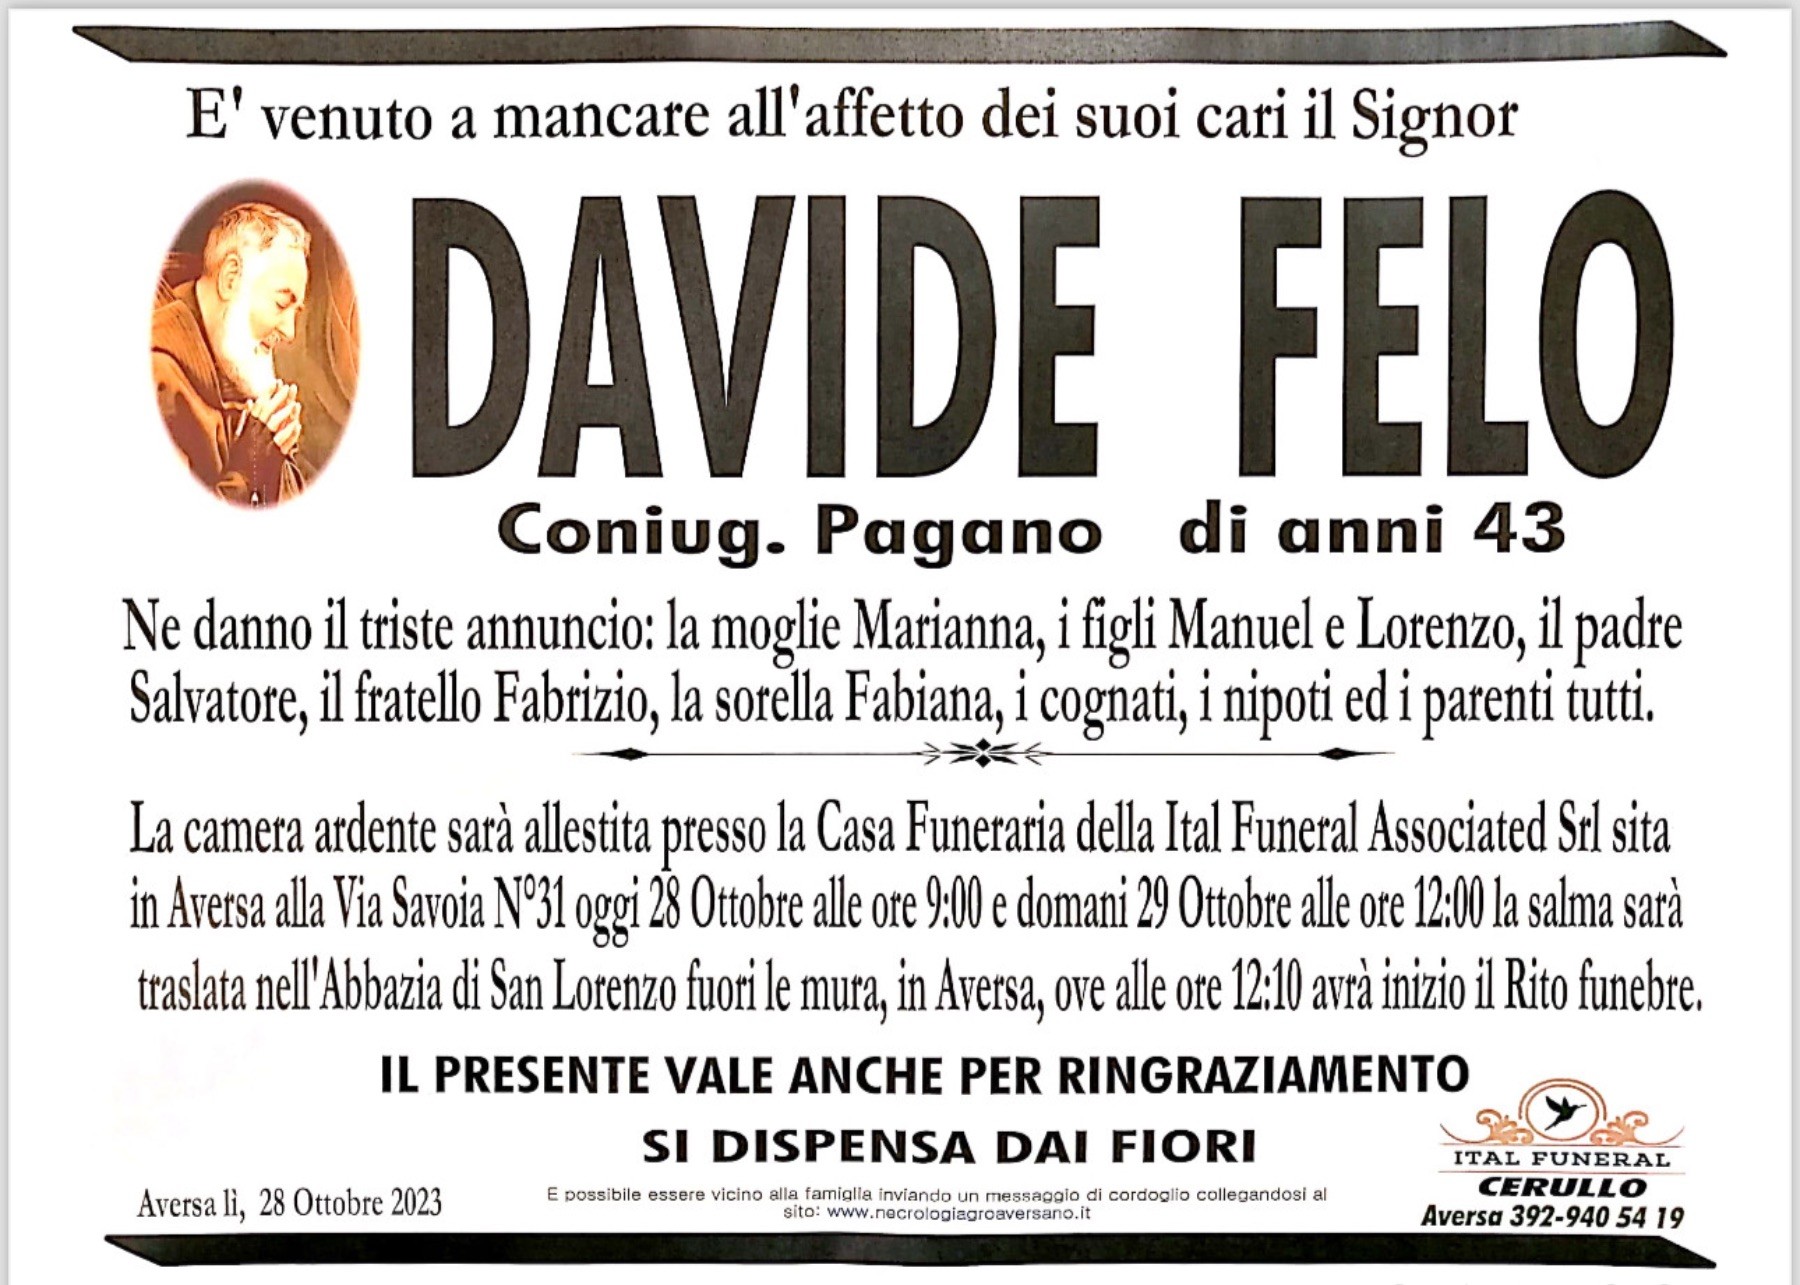 Davide Felo